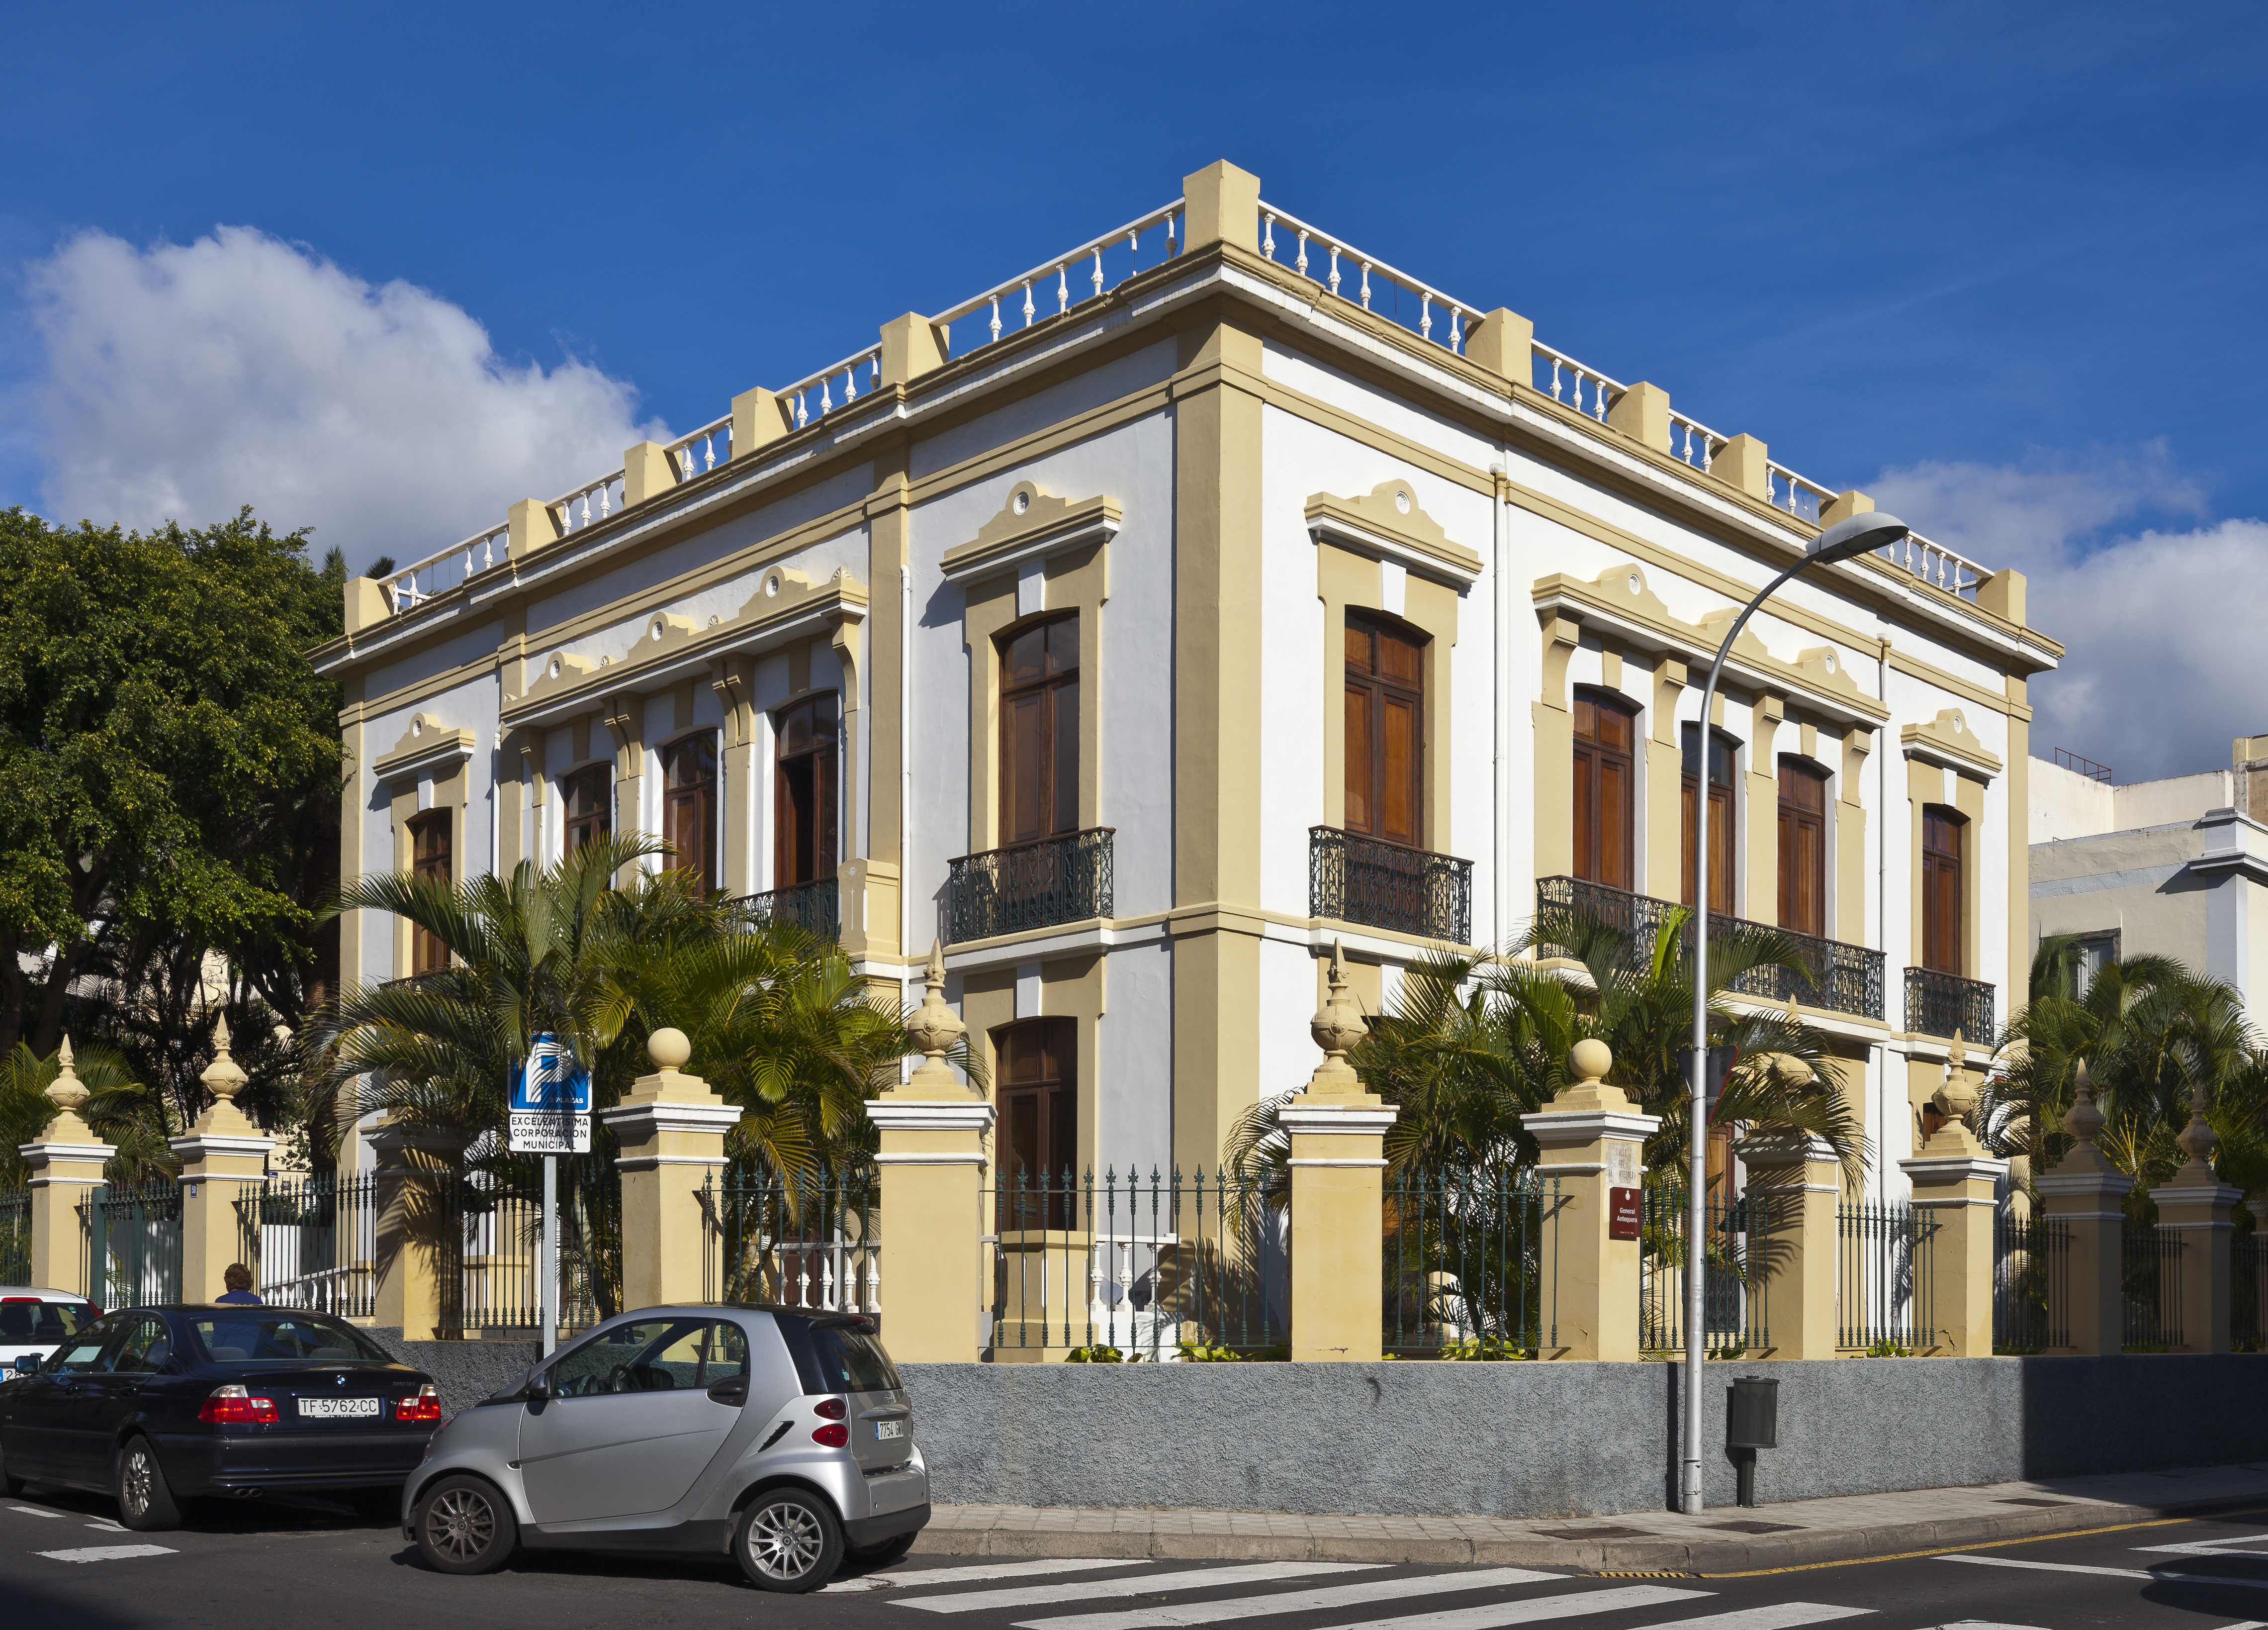 Edificio en calle General Antequera, Santa Cruz de Tenerife, España, 2012-12-15, DD 02